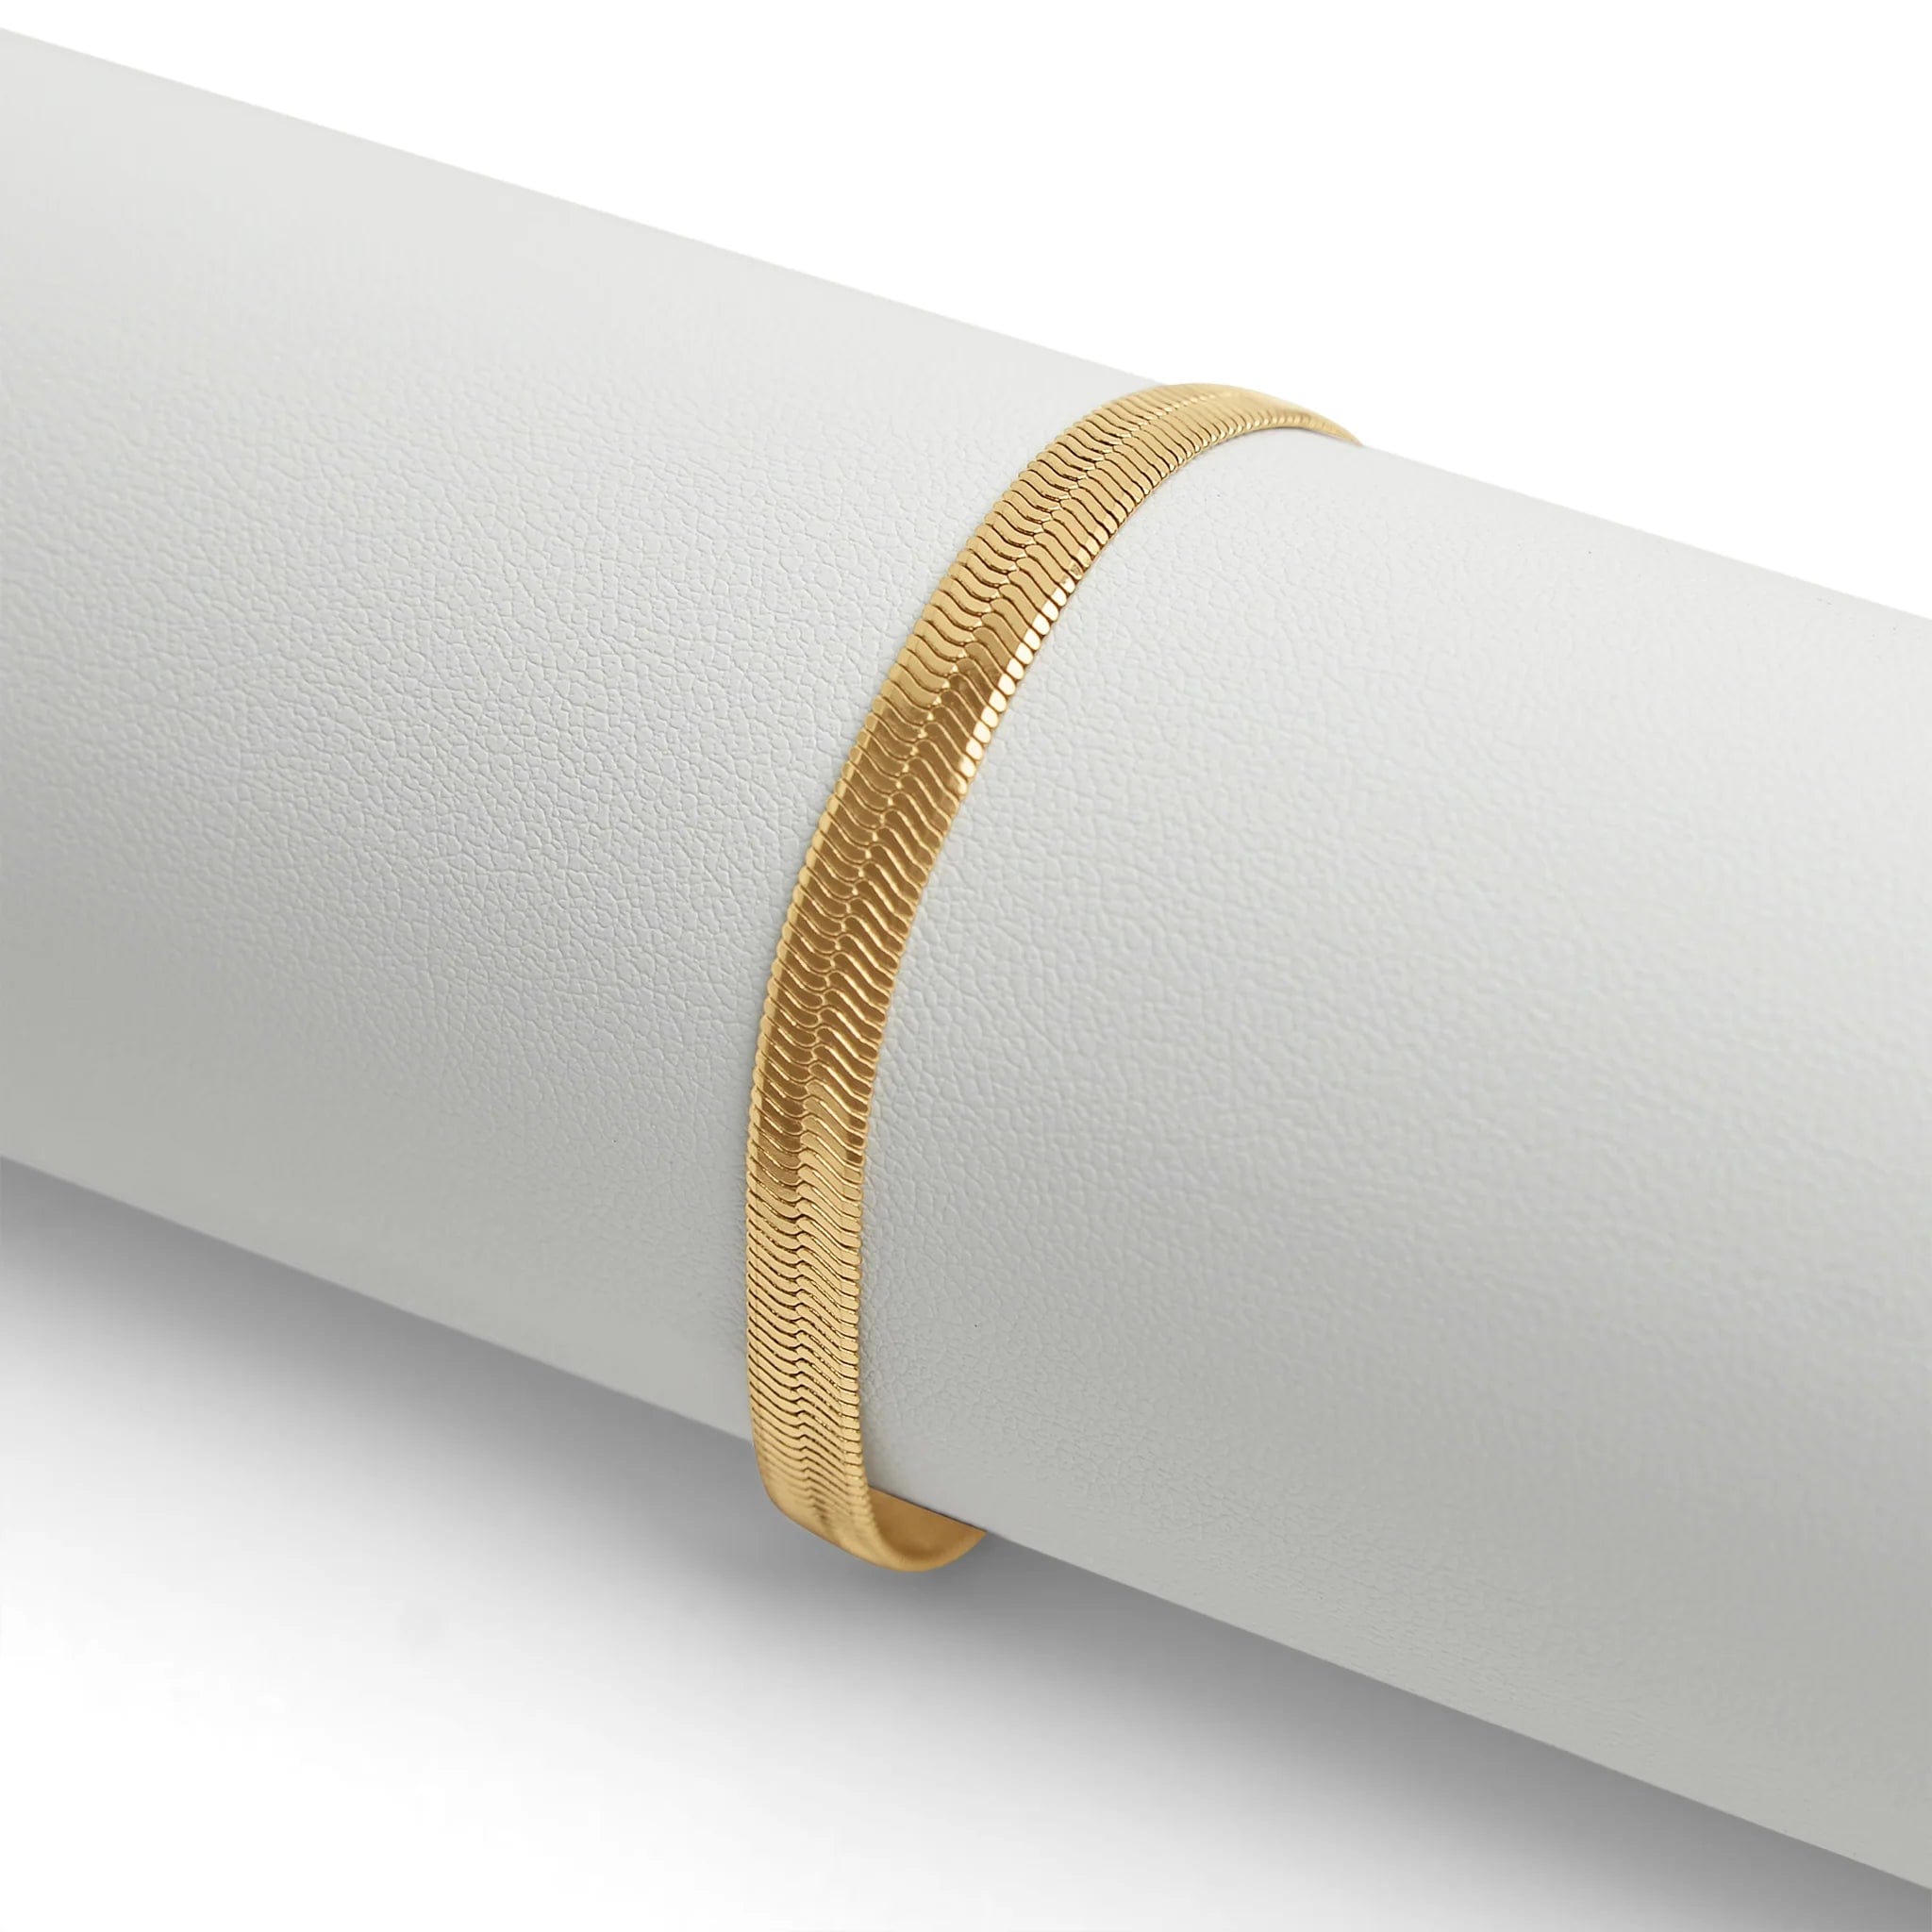 Herringbone Gold Bracelet - CinloCo